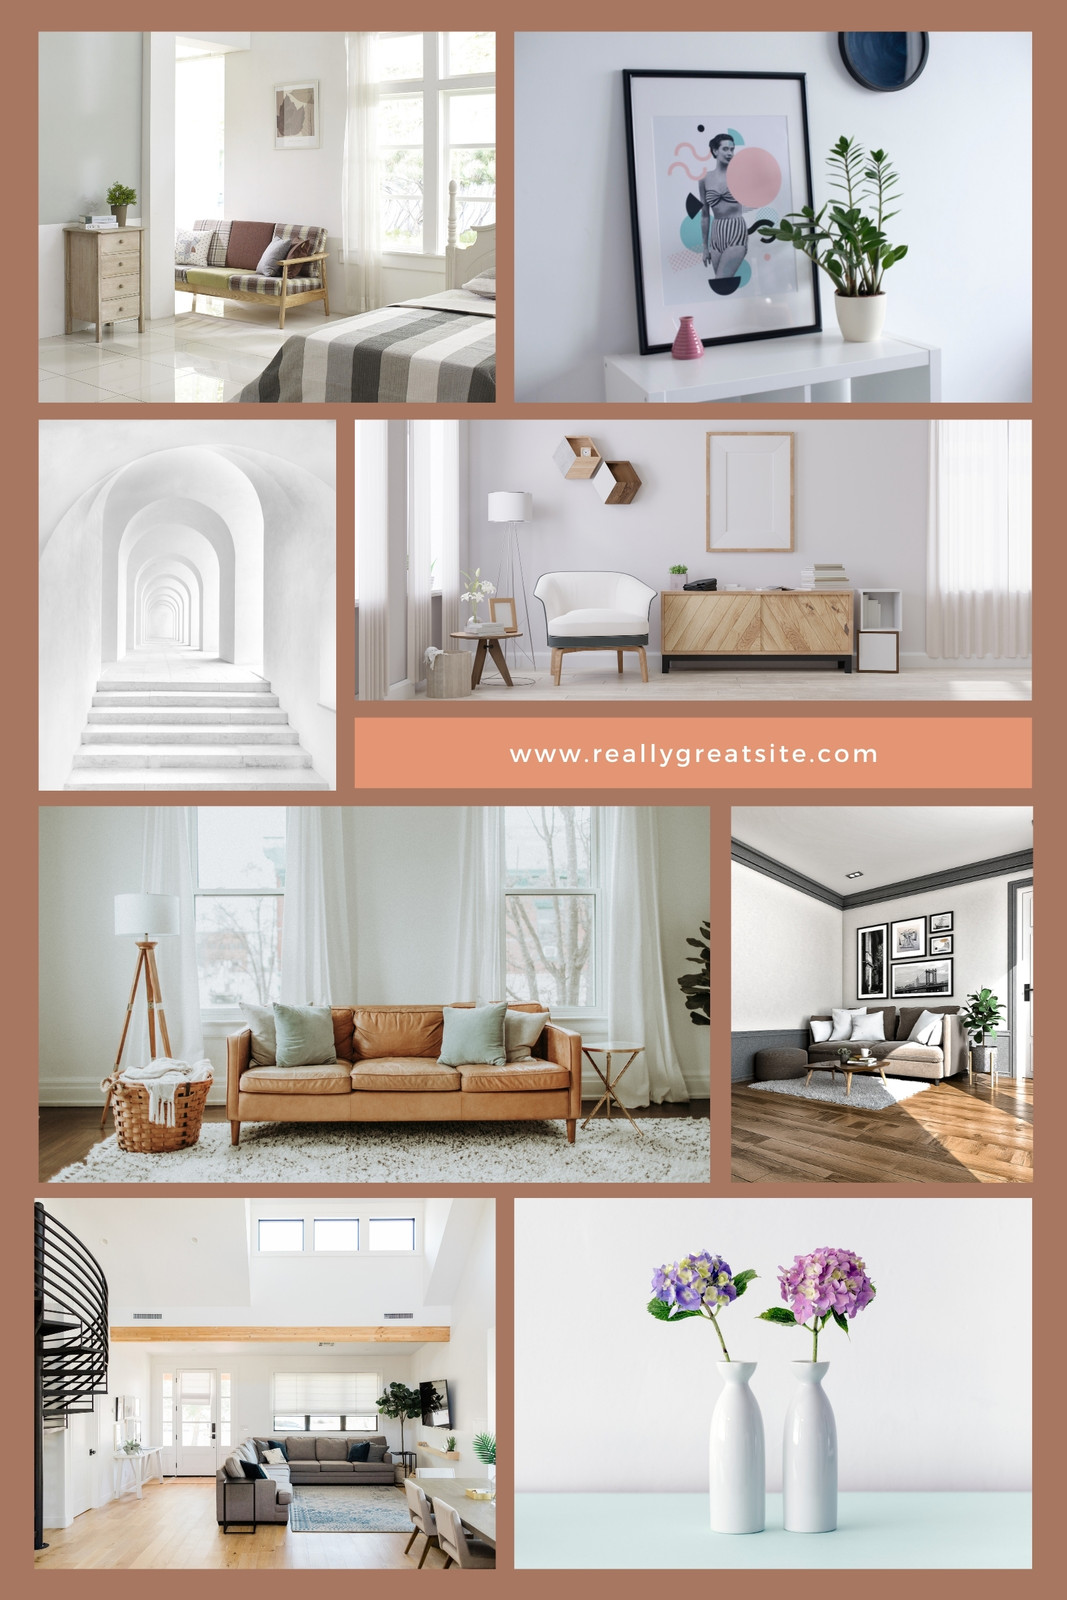 Free custom printable interior design photo collage templates | Canva